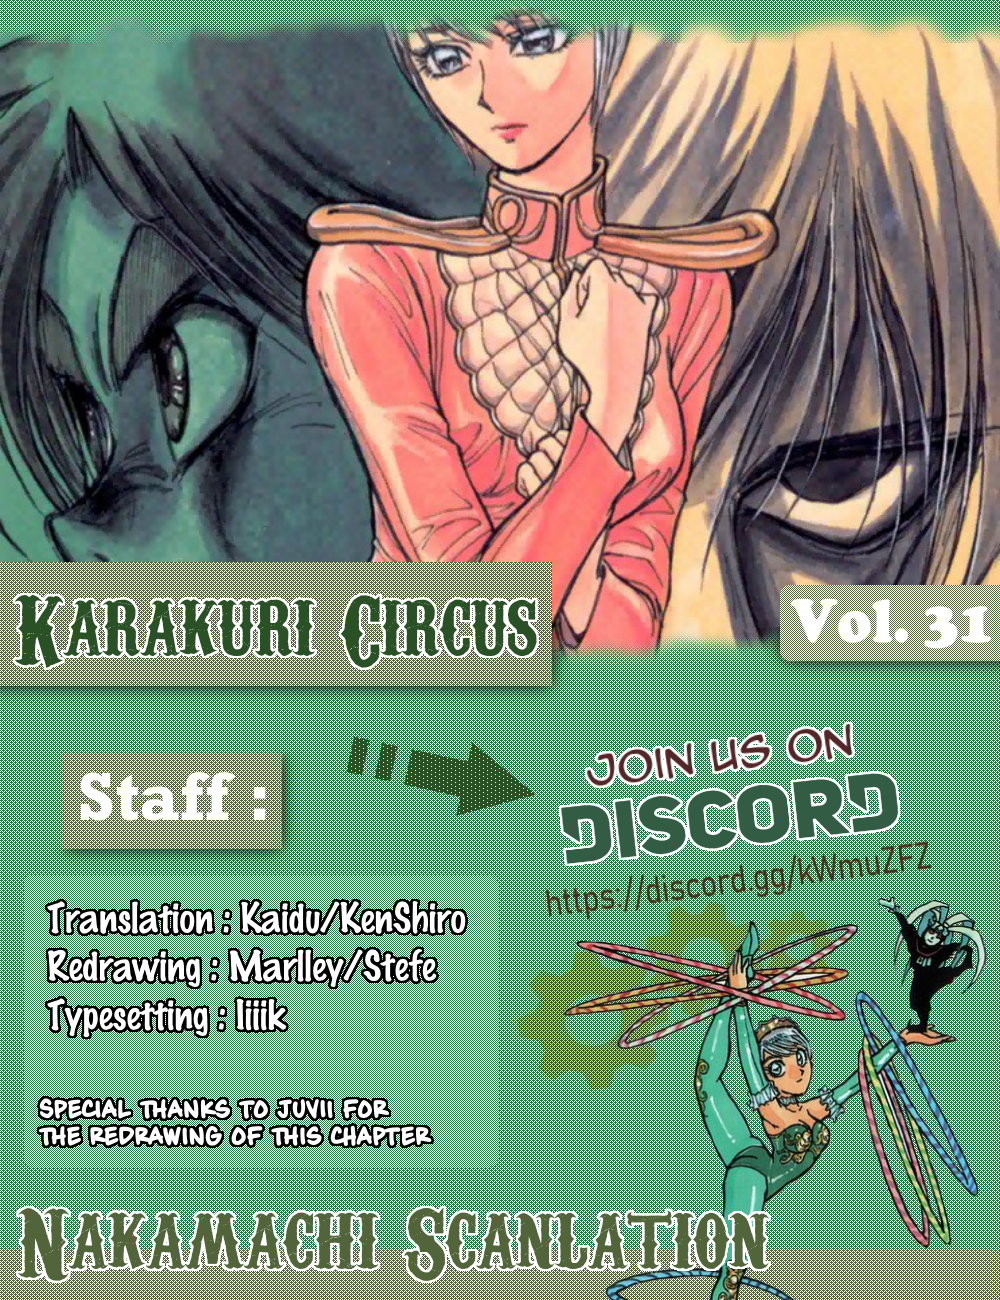 Karakuri Circus Chapter 301: Main Part - Days With Narumi - Act 1: Opening Bell - Picture 1